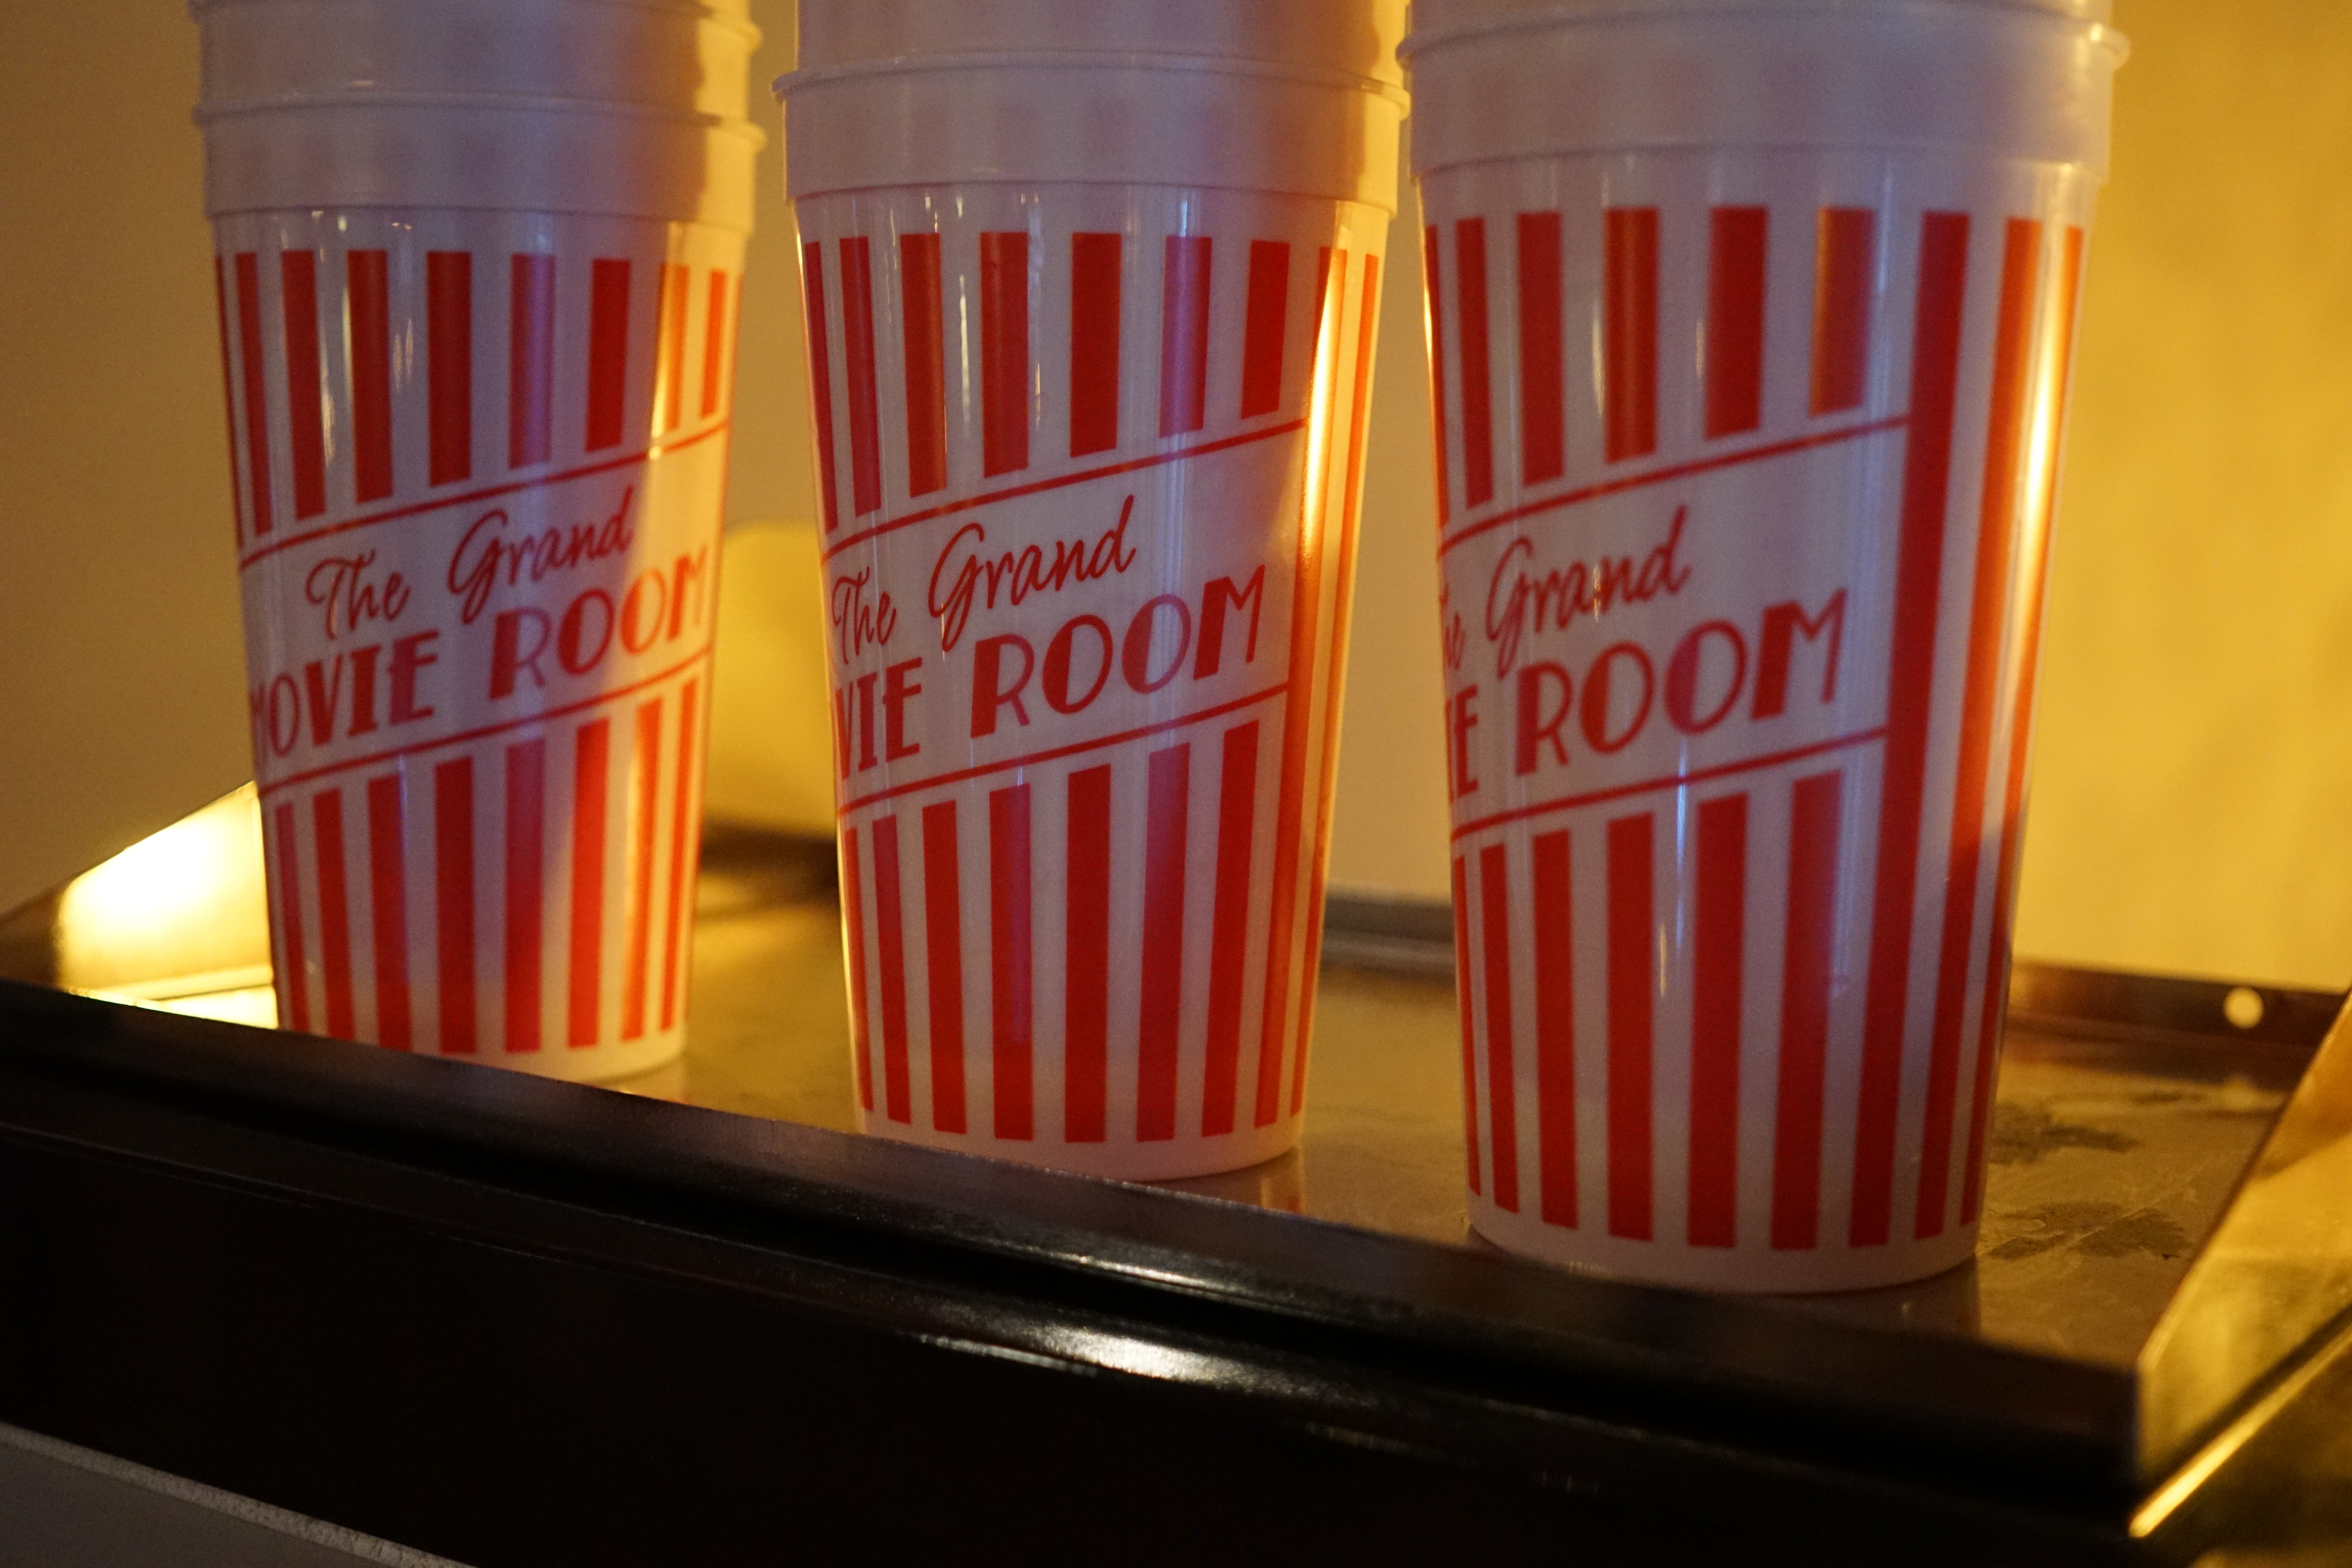 Grand River lodge movie room popcorn